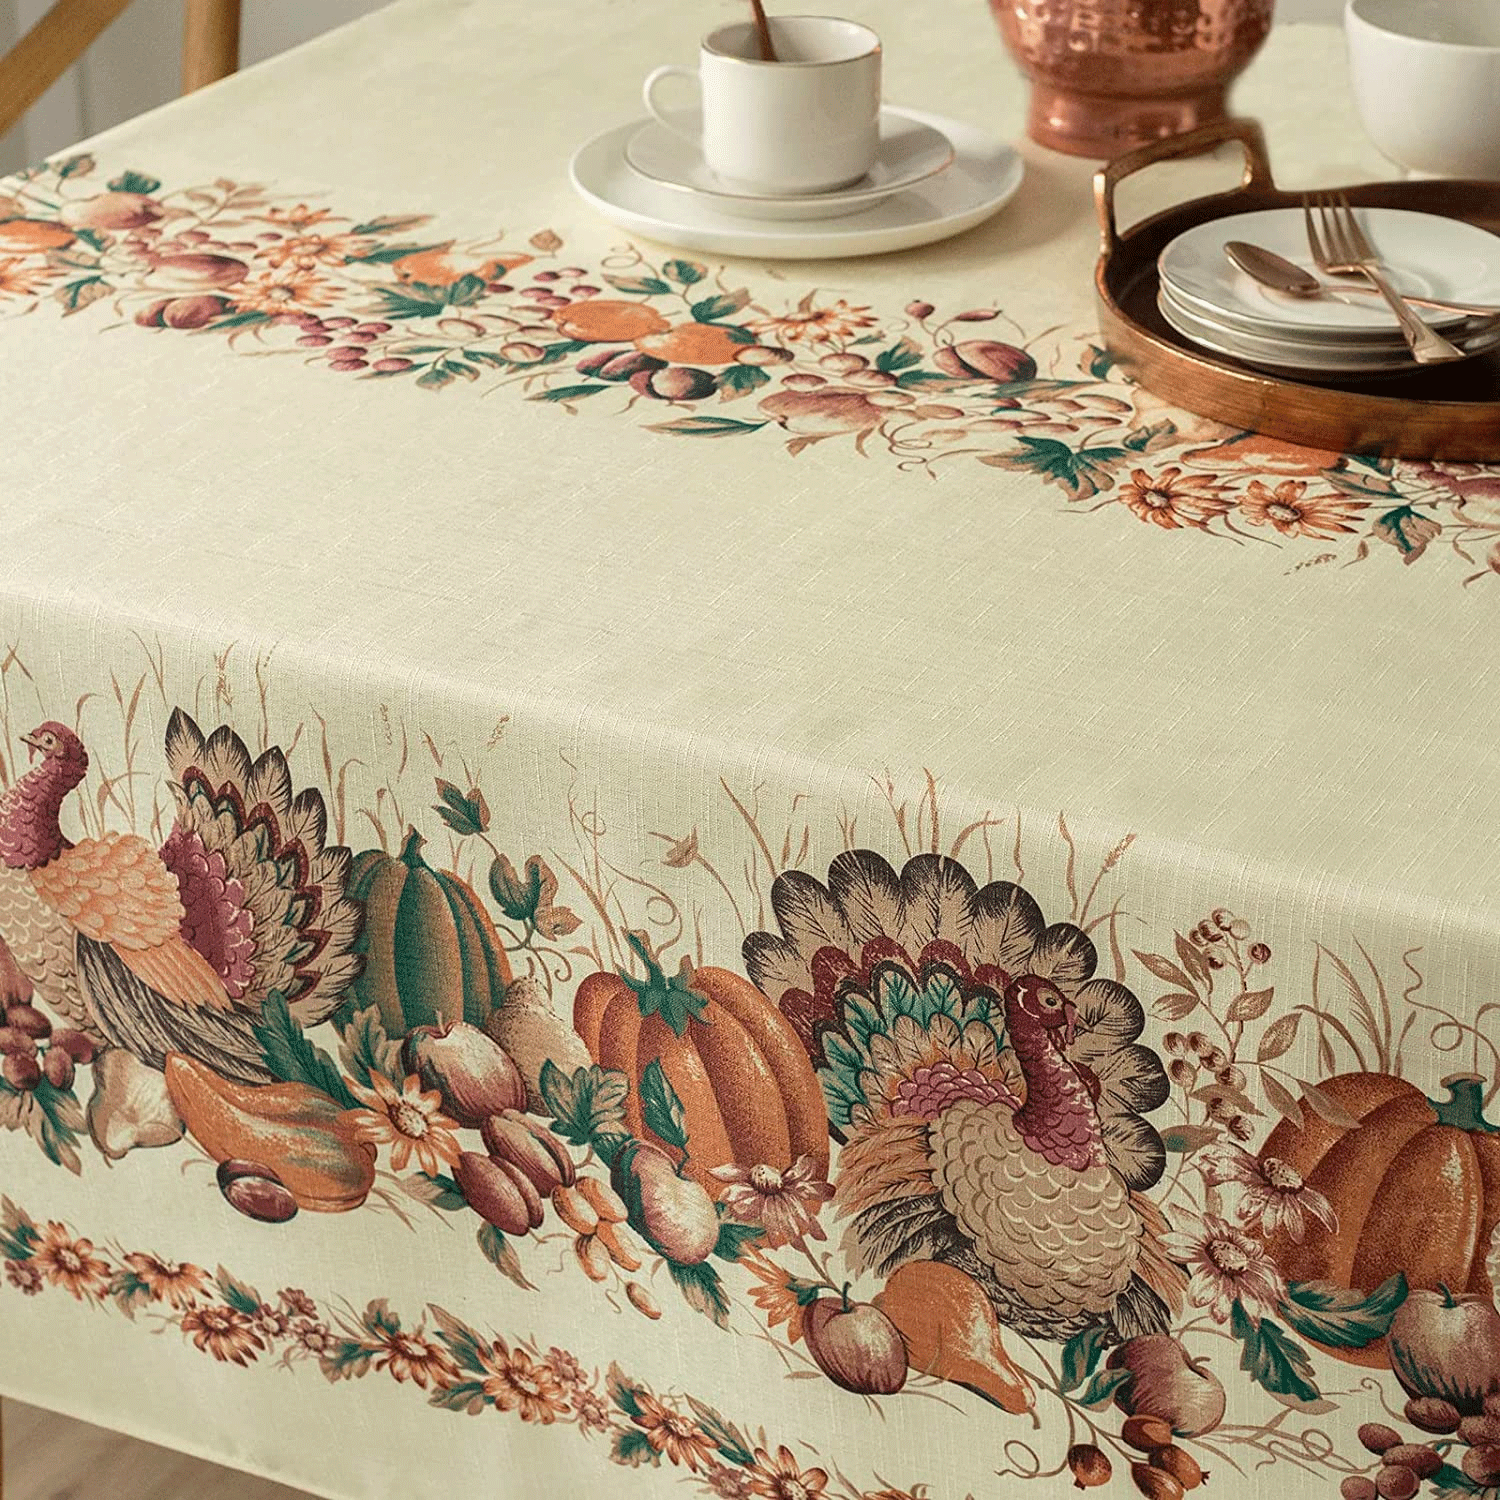 Thanksgiving Printed Fabric Tablecloth – CurtainShop.com